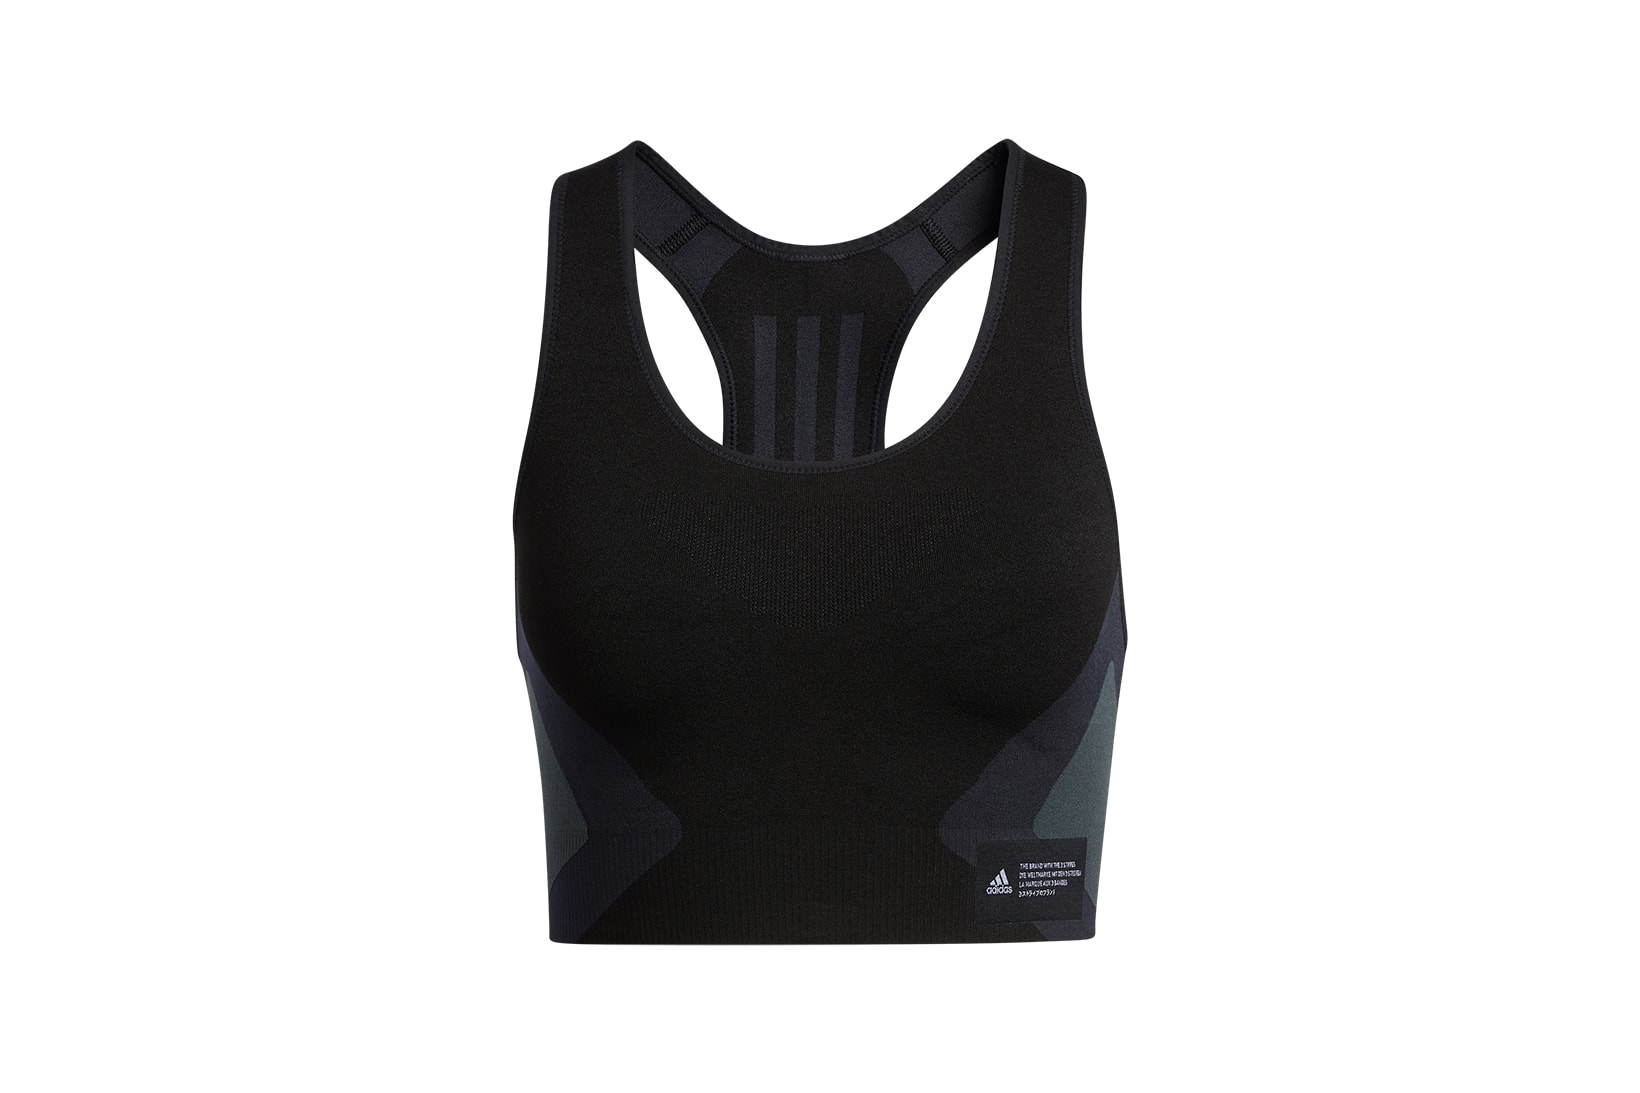 adidas pharrell williams pw primeknit fine collaboration activewear black tank top sports bra